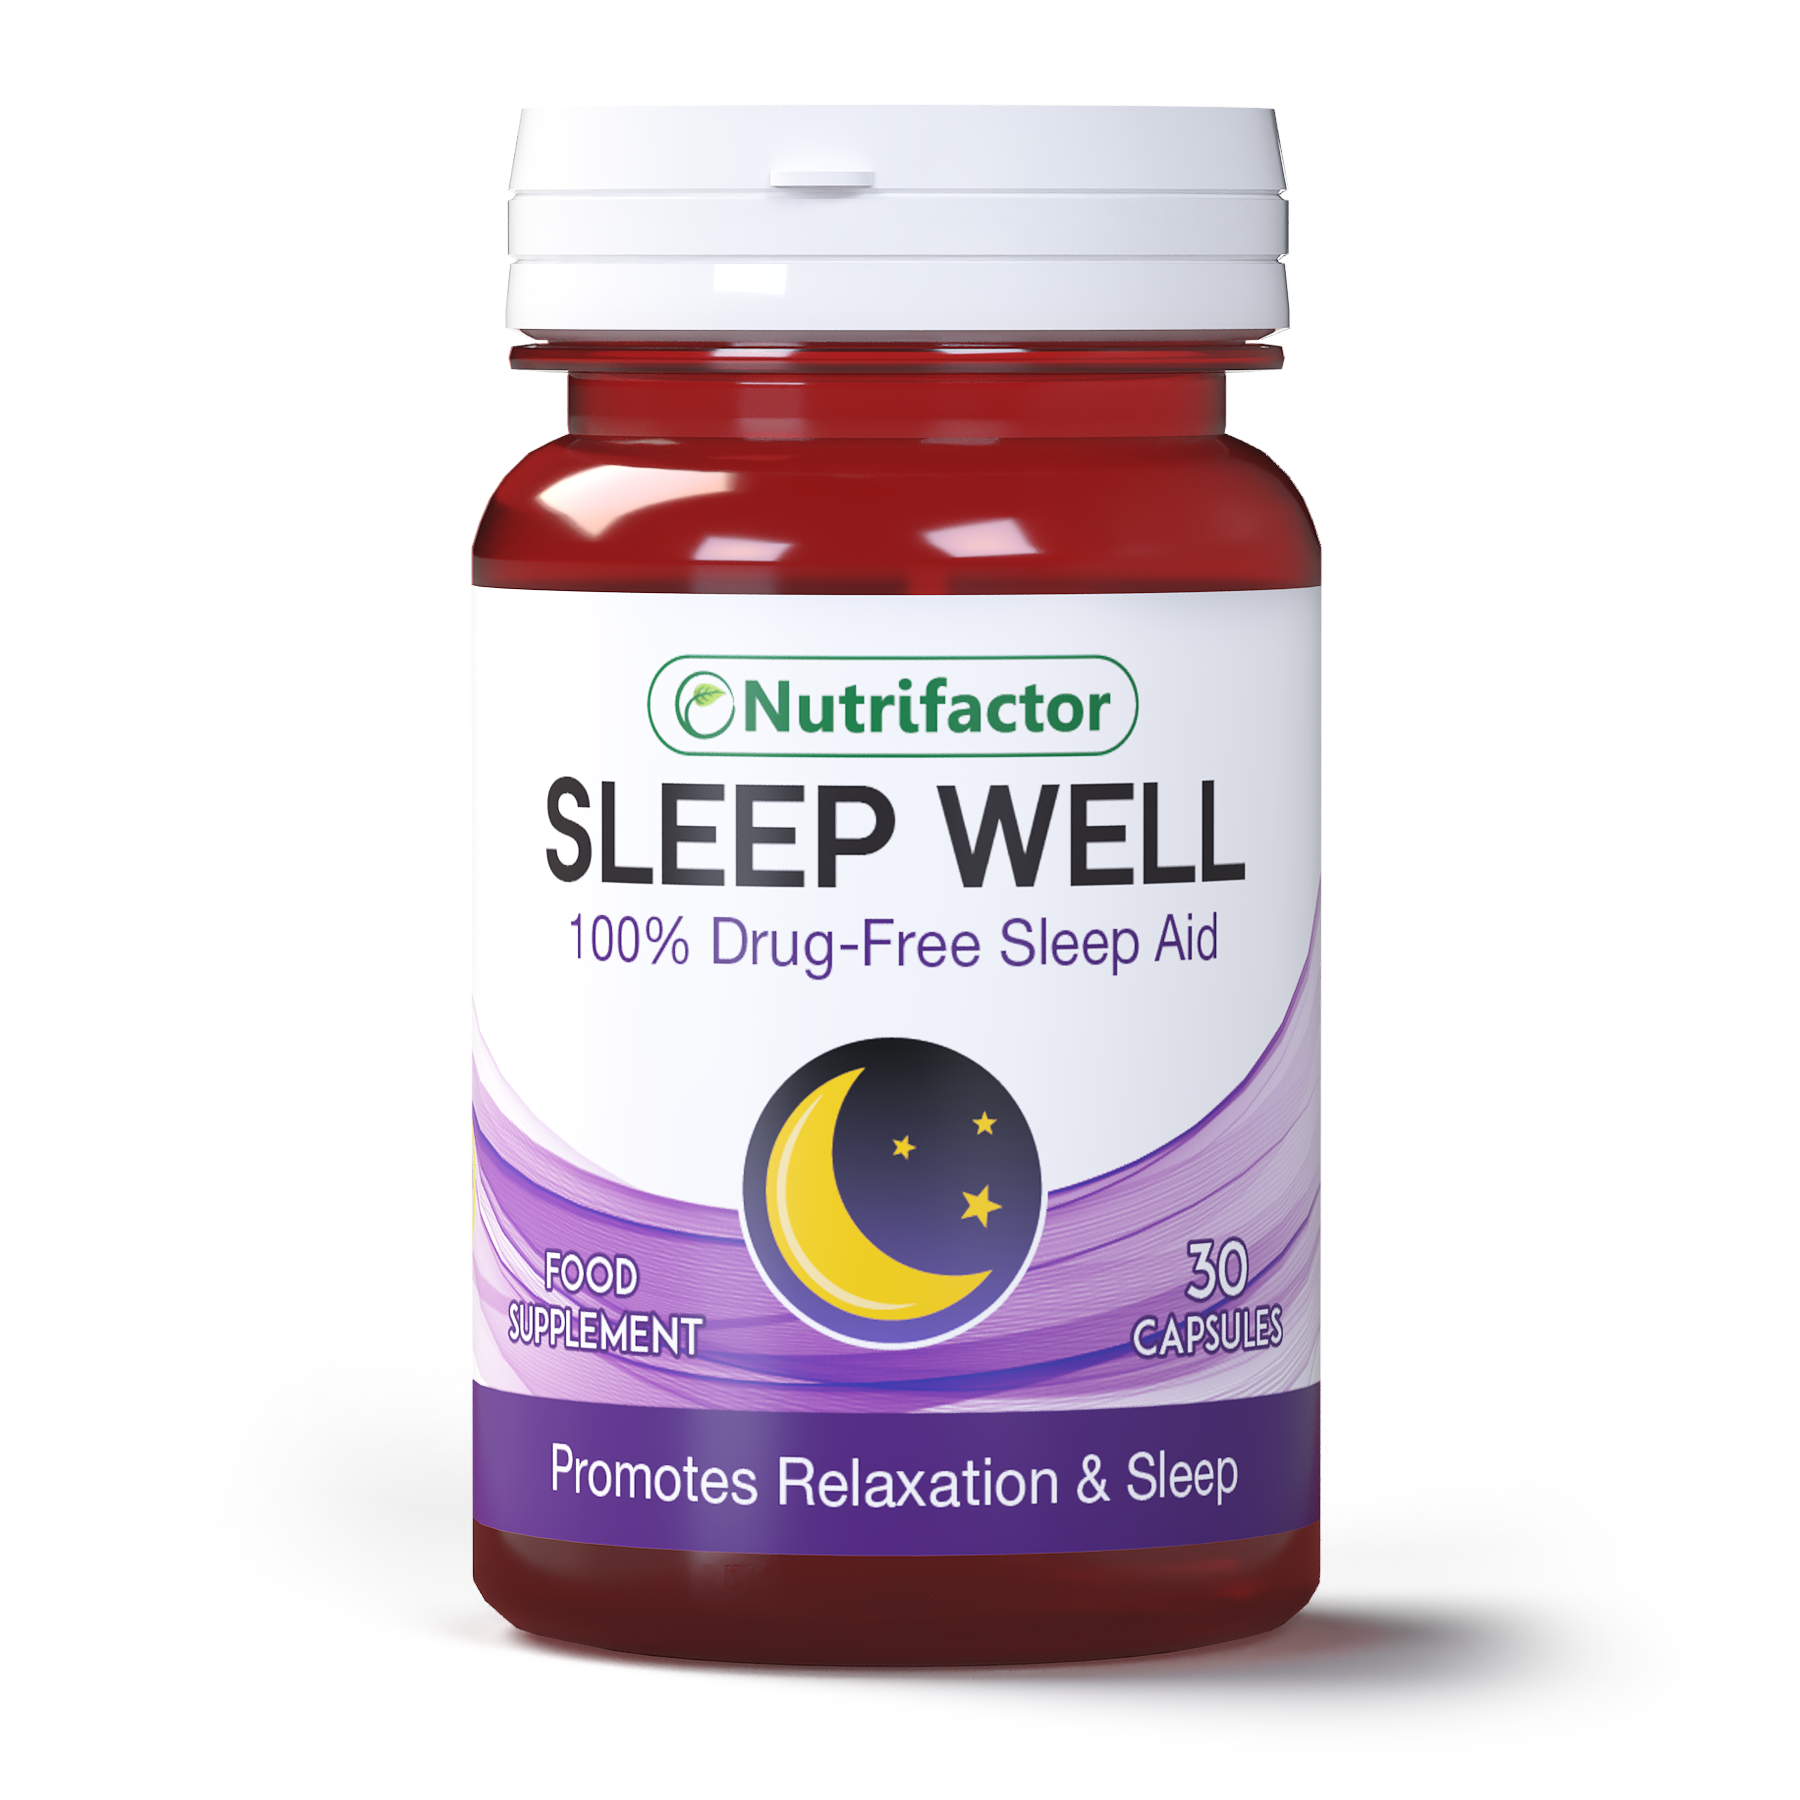 Nutrifactor  Sleep Well Promotes relaxation and a sound sleep